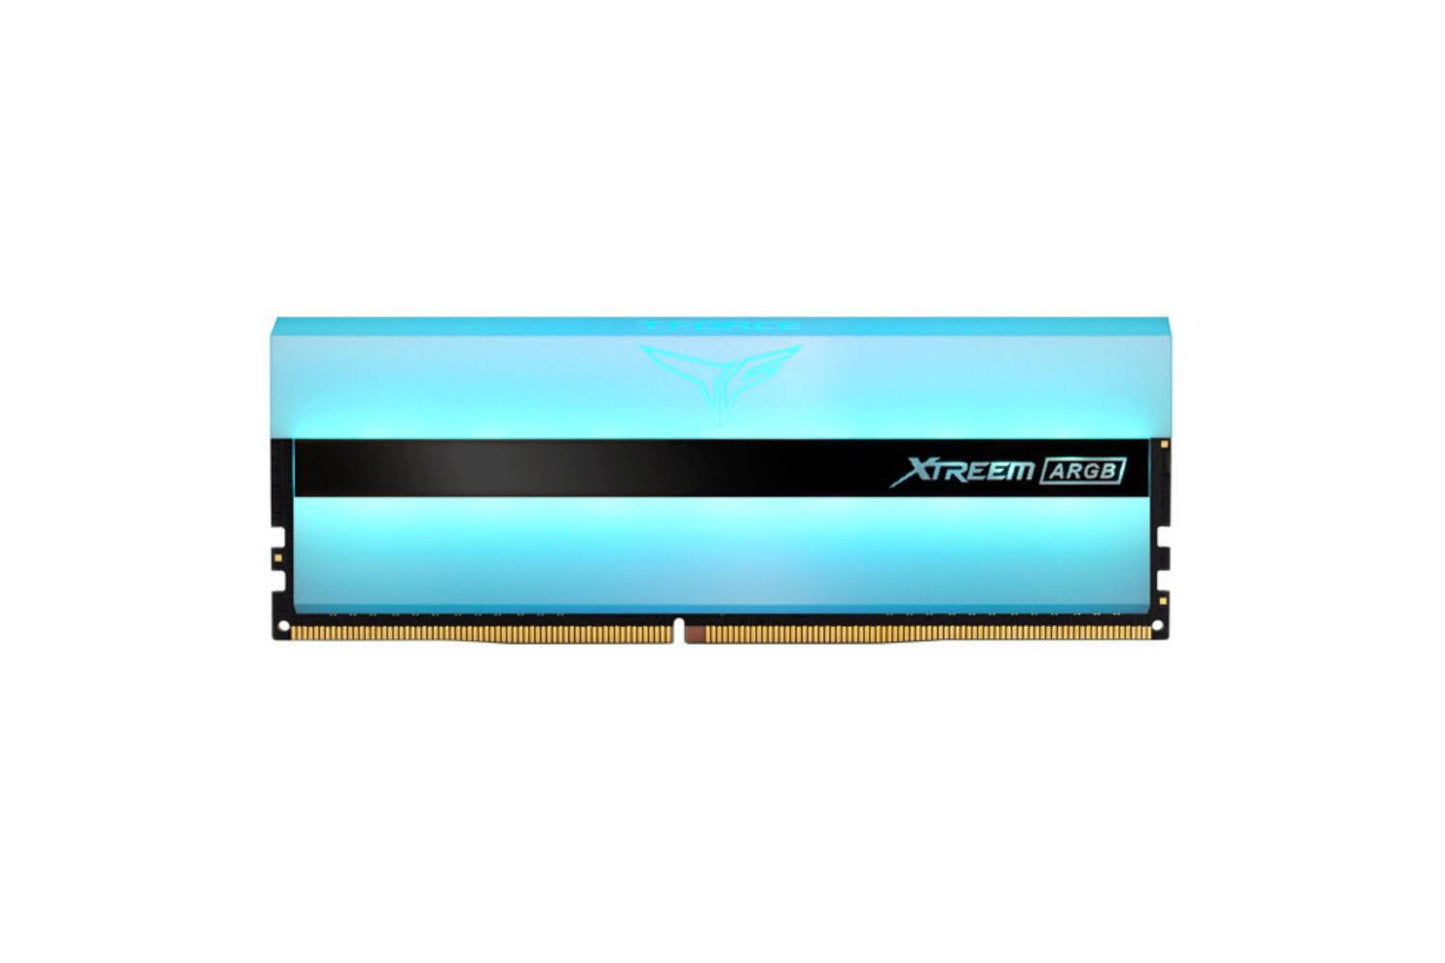 TEAMGROUP XTREEM ARGB DDR4 3600Mhz 16GB (8GB x 2) CL18 Gaming Memory